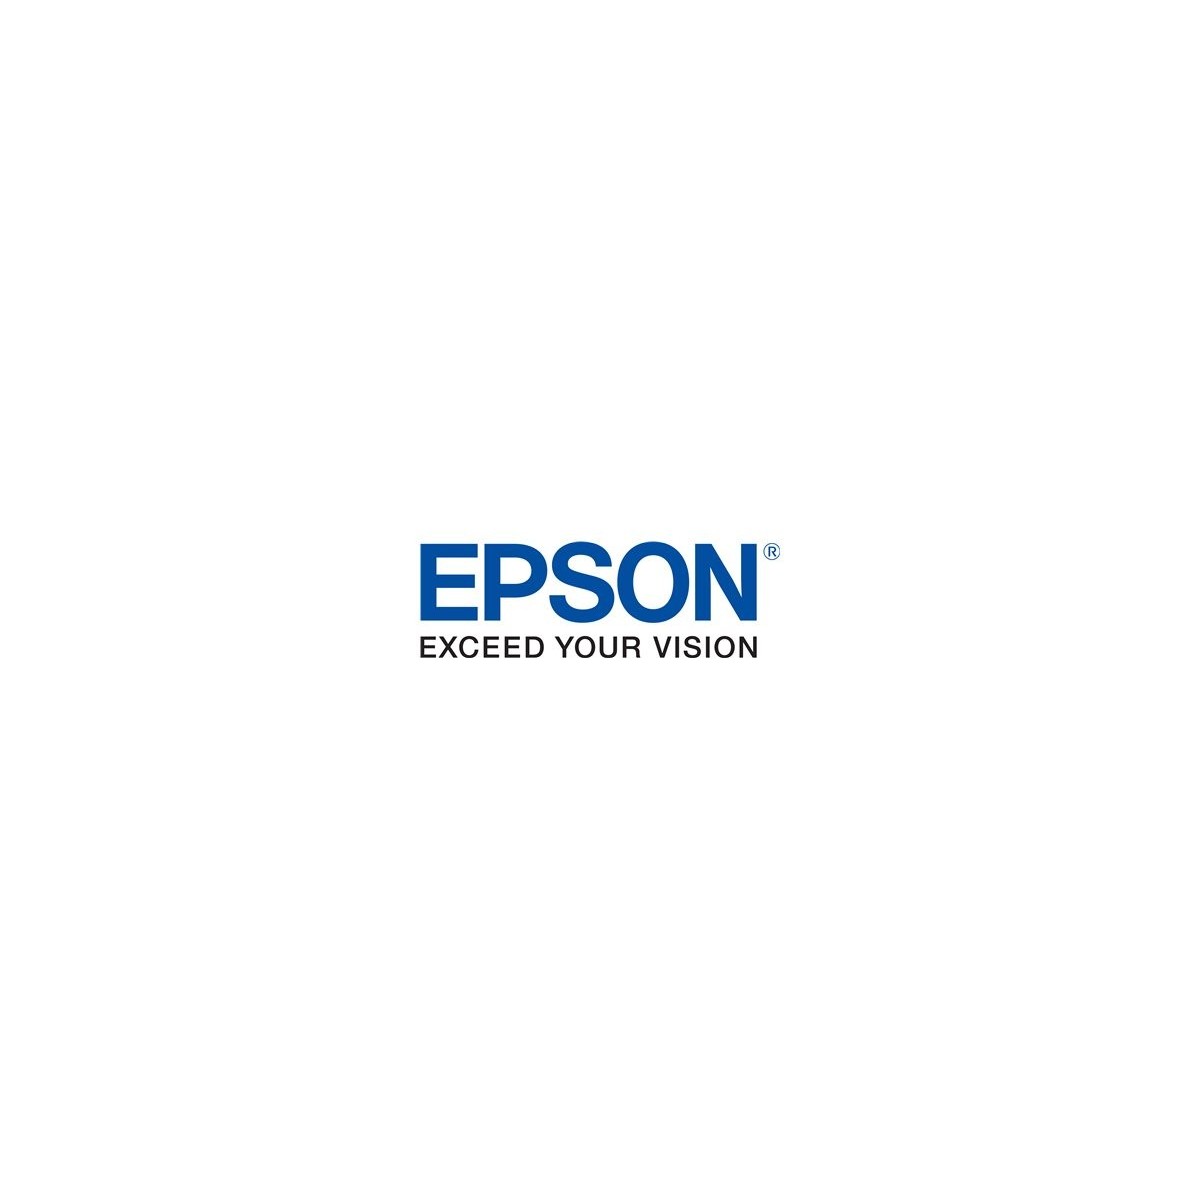 Epson Fuser Unit 100k - Laser - 100000 pages - C13S053023 - Japan - Epson - - EPL-N2550T - EPL-N2550DT - EPL-N2550D2T - EPL-N255